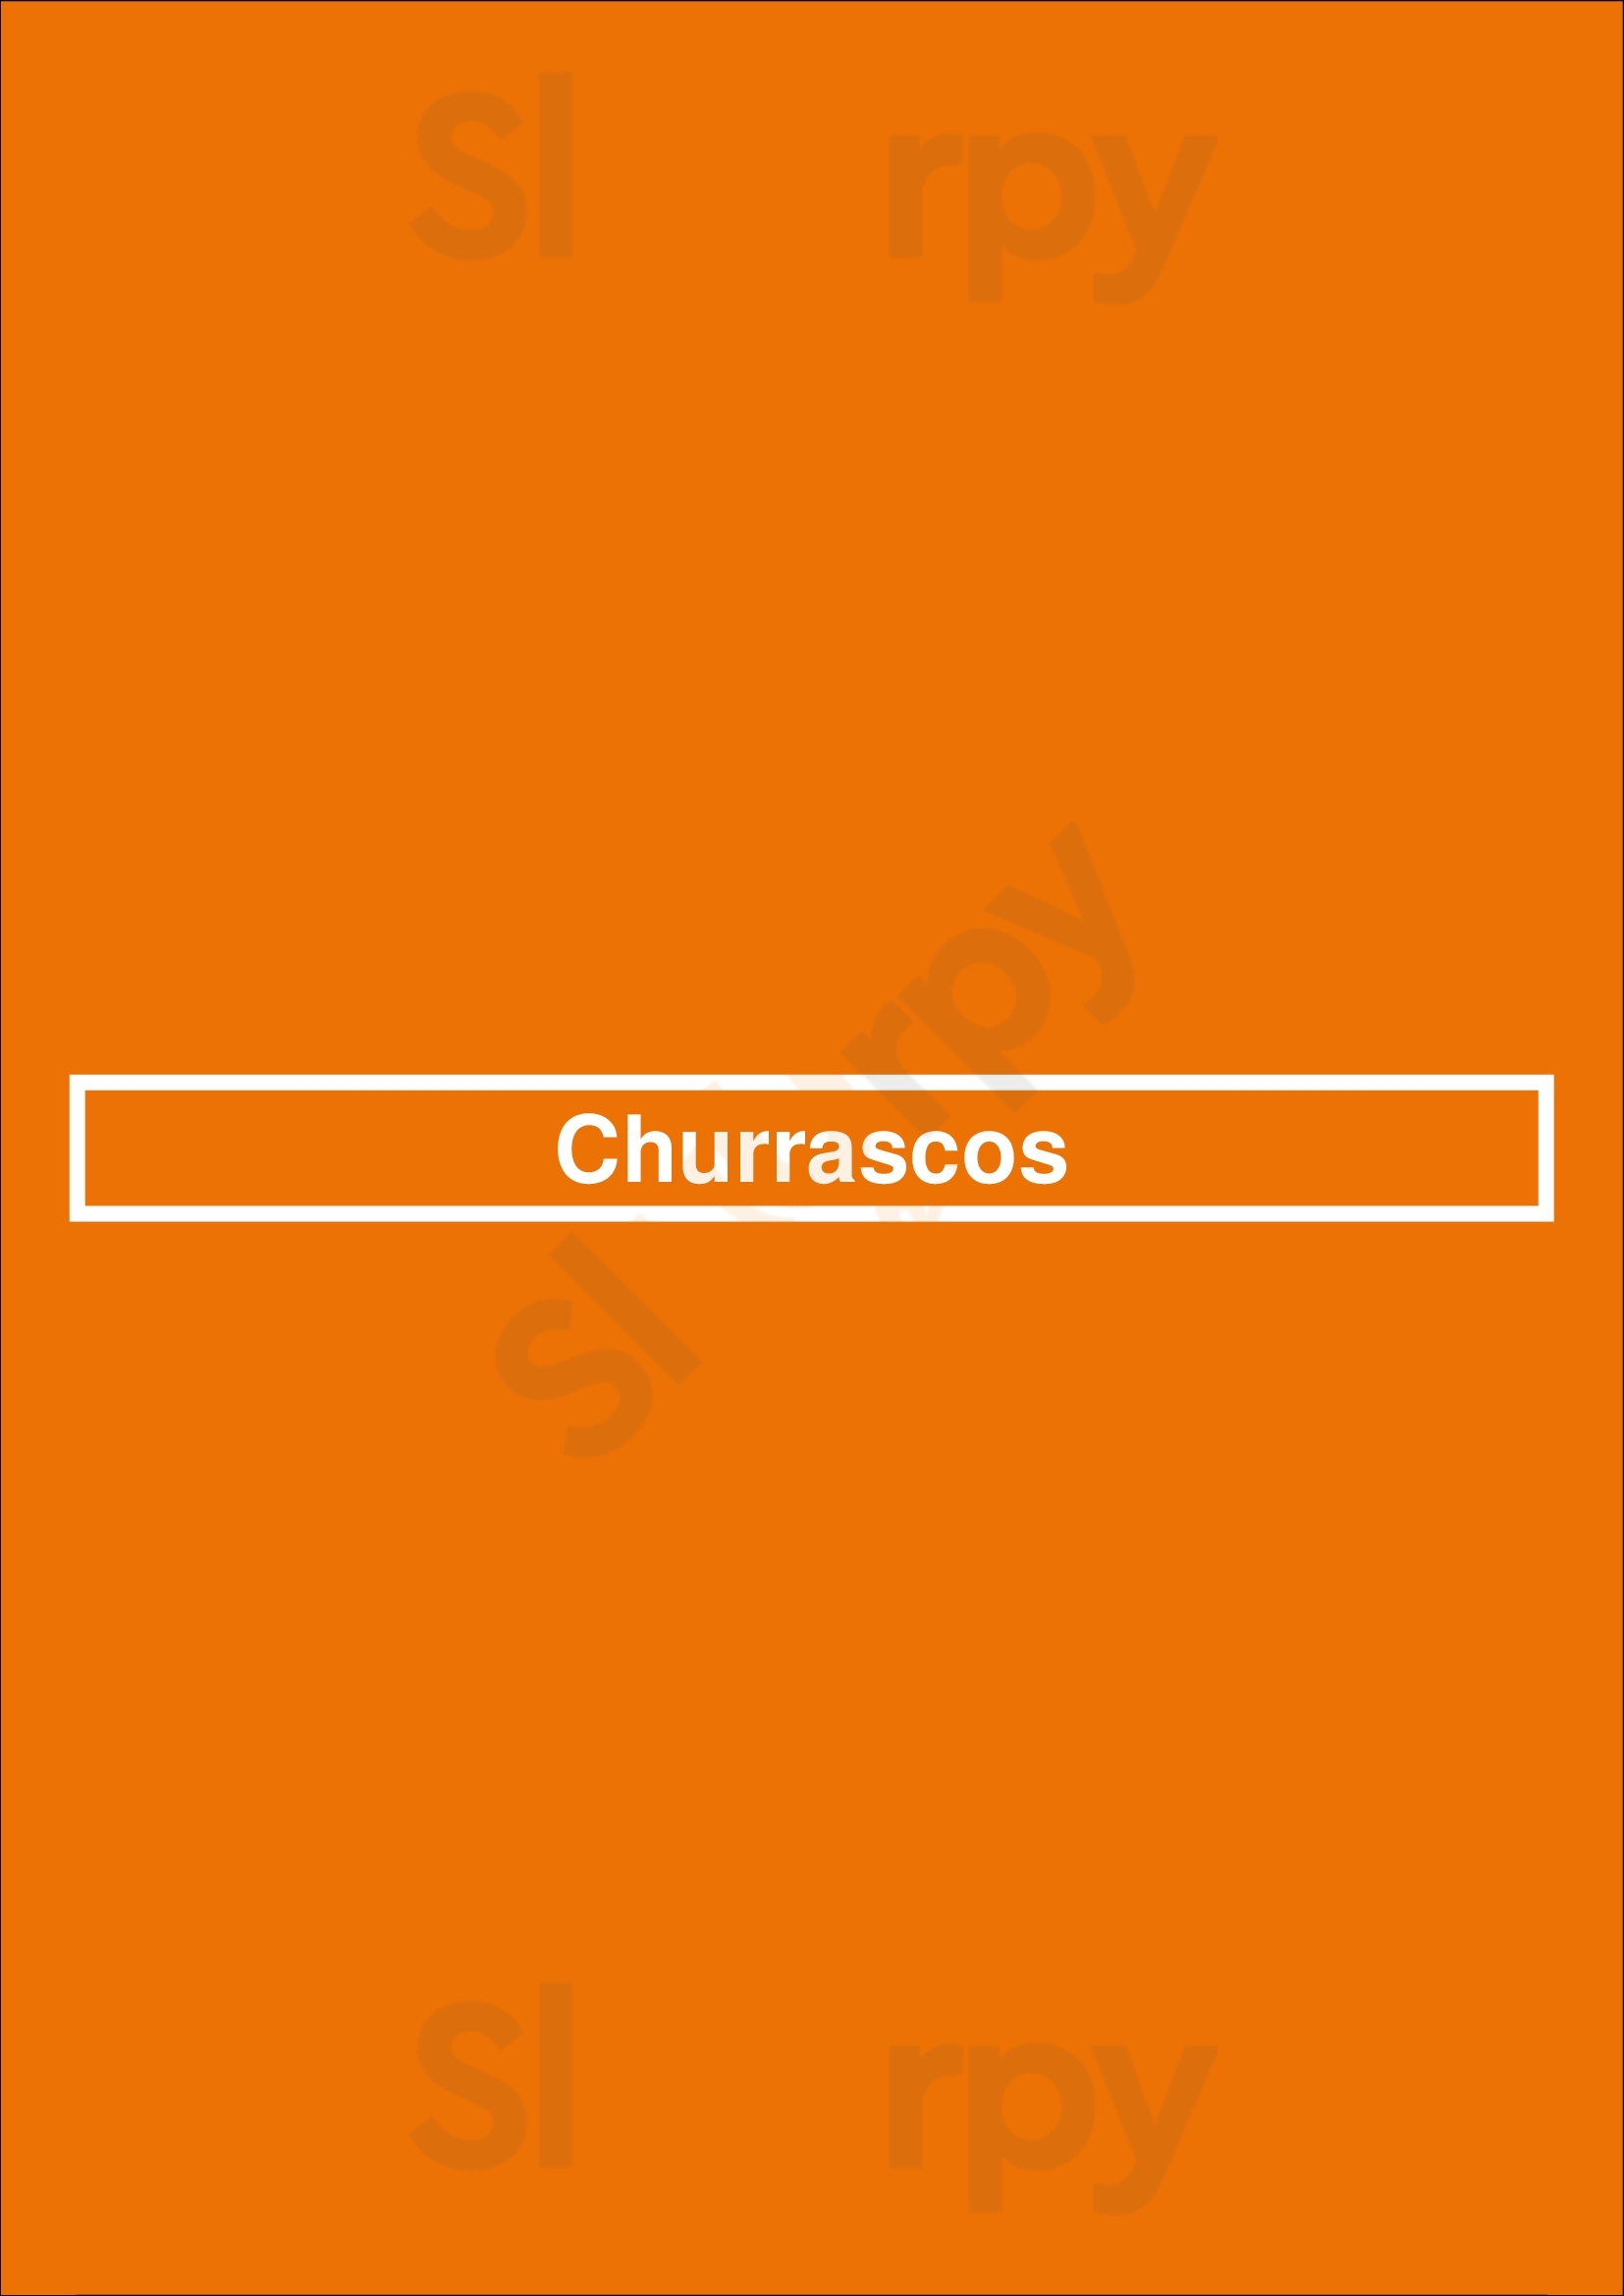 Churrascos Houston Menu - 1